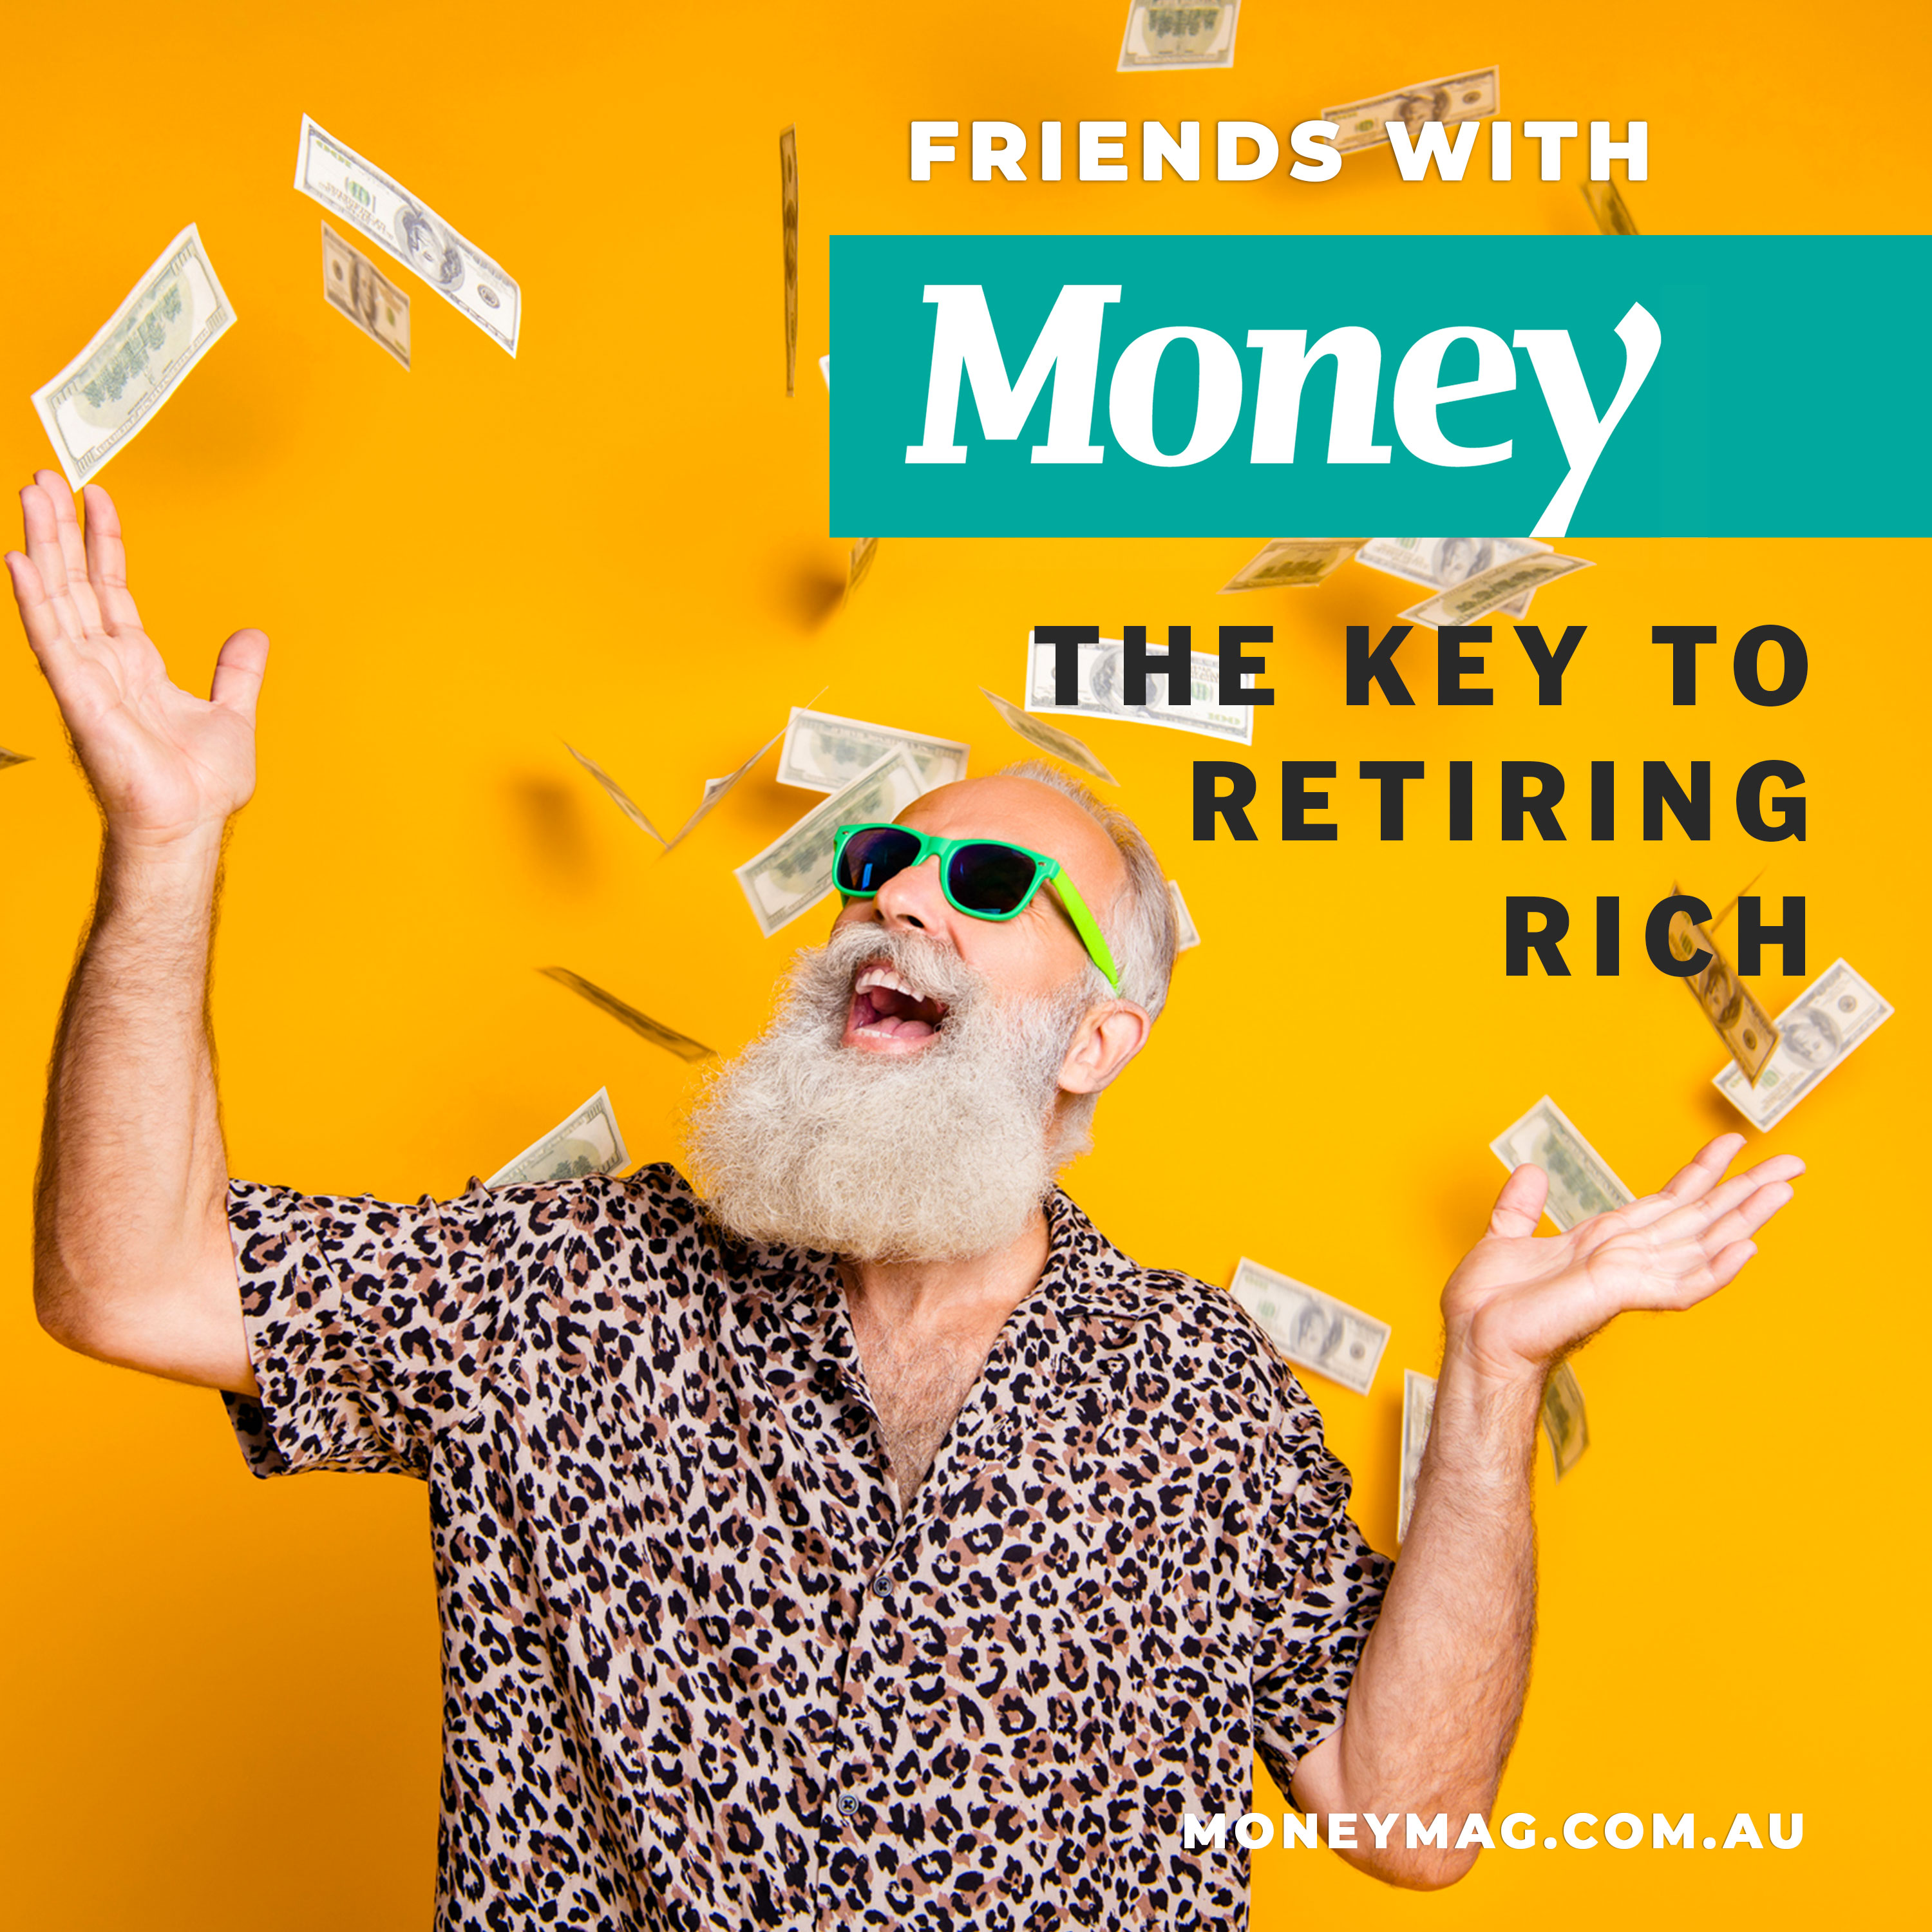 The key to retiring rich